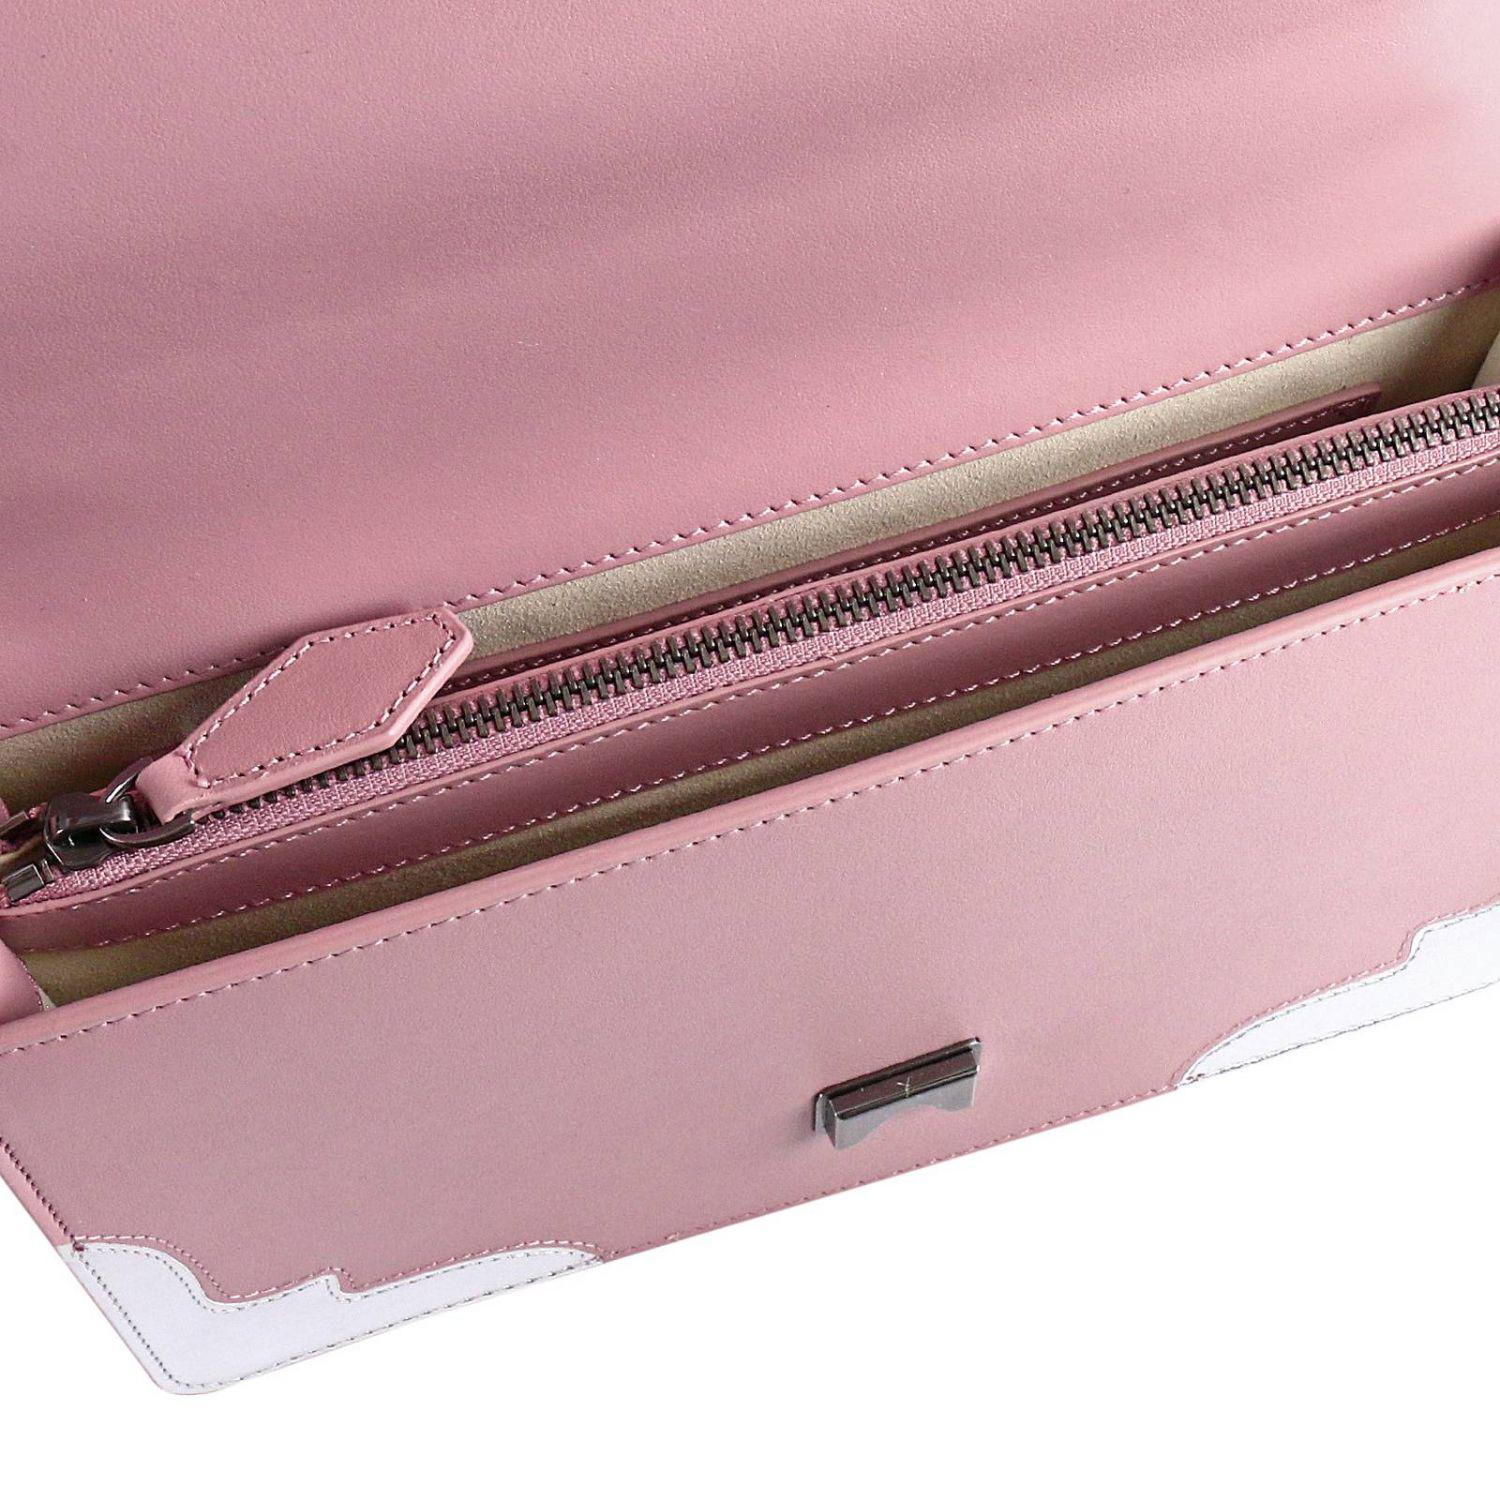 Pinko Love Me Tender Leather Cross-body Bag in Pink | Lyst